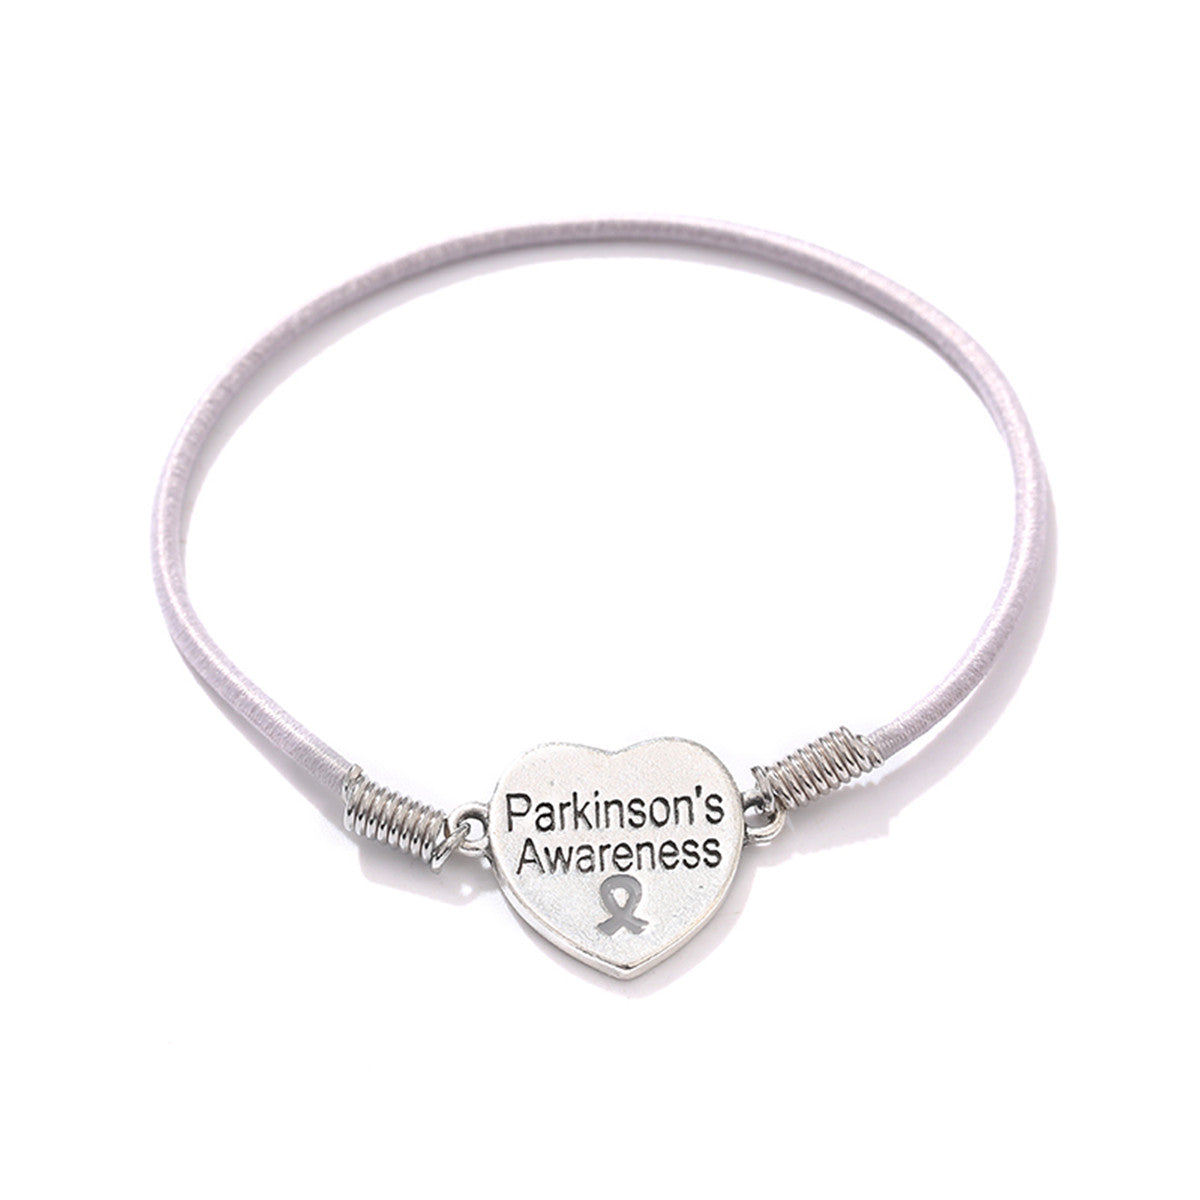 Sunstone Parkinsons Awareness Bracelet 00124000138  Holtans Jewelry   Winona MN